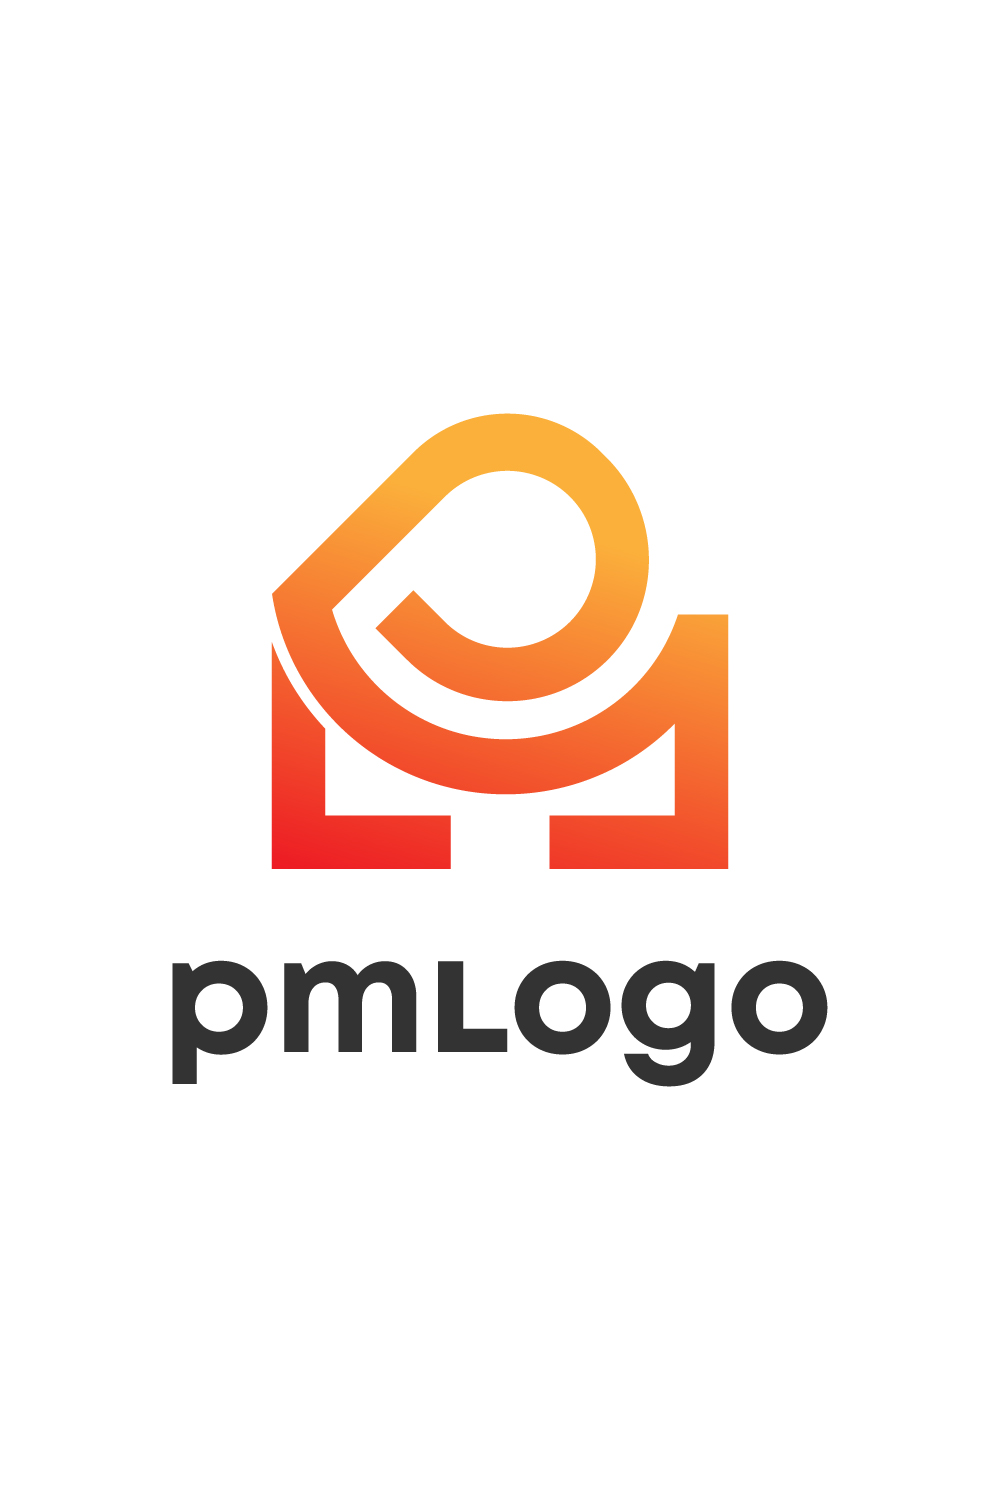 PM logo pinterest preview image.